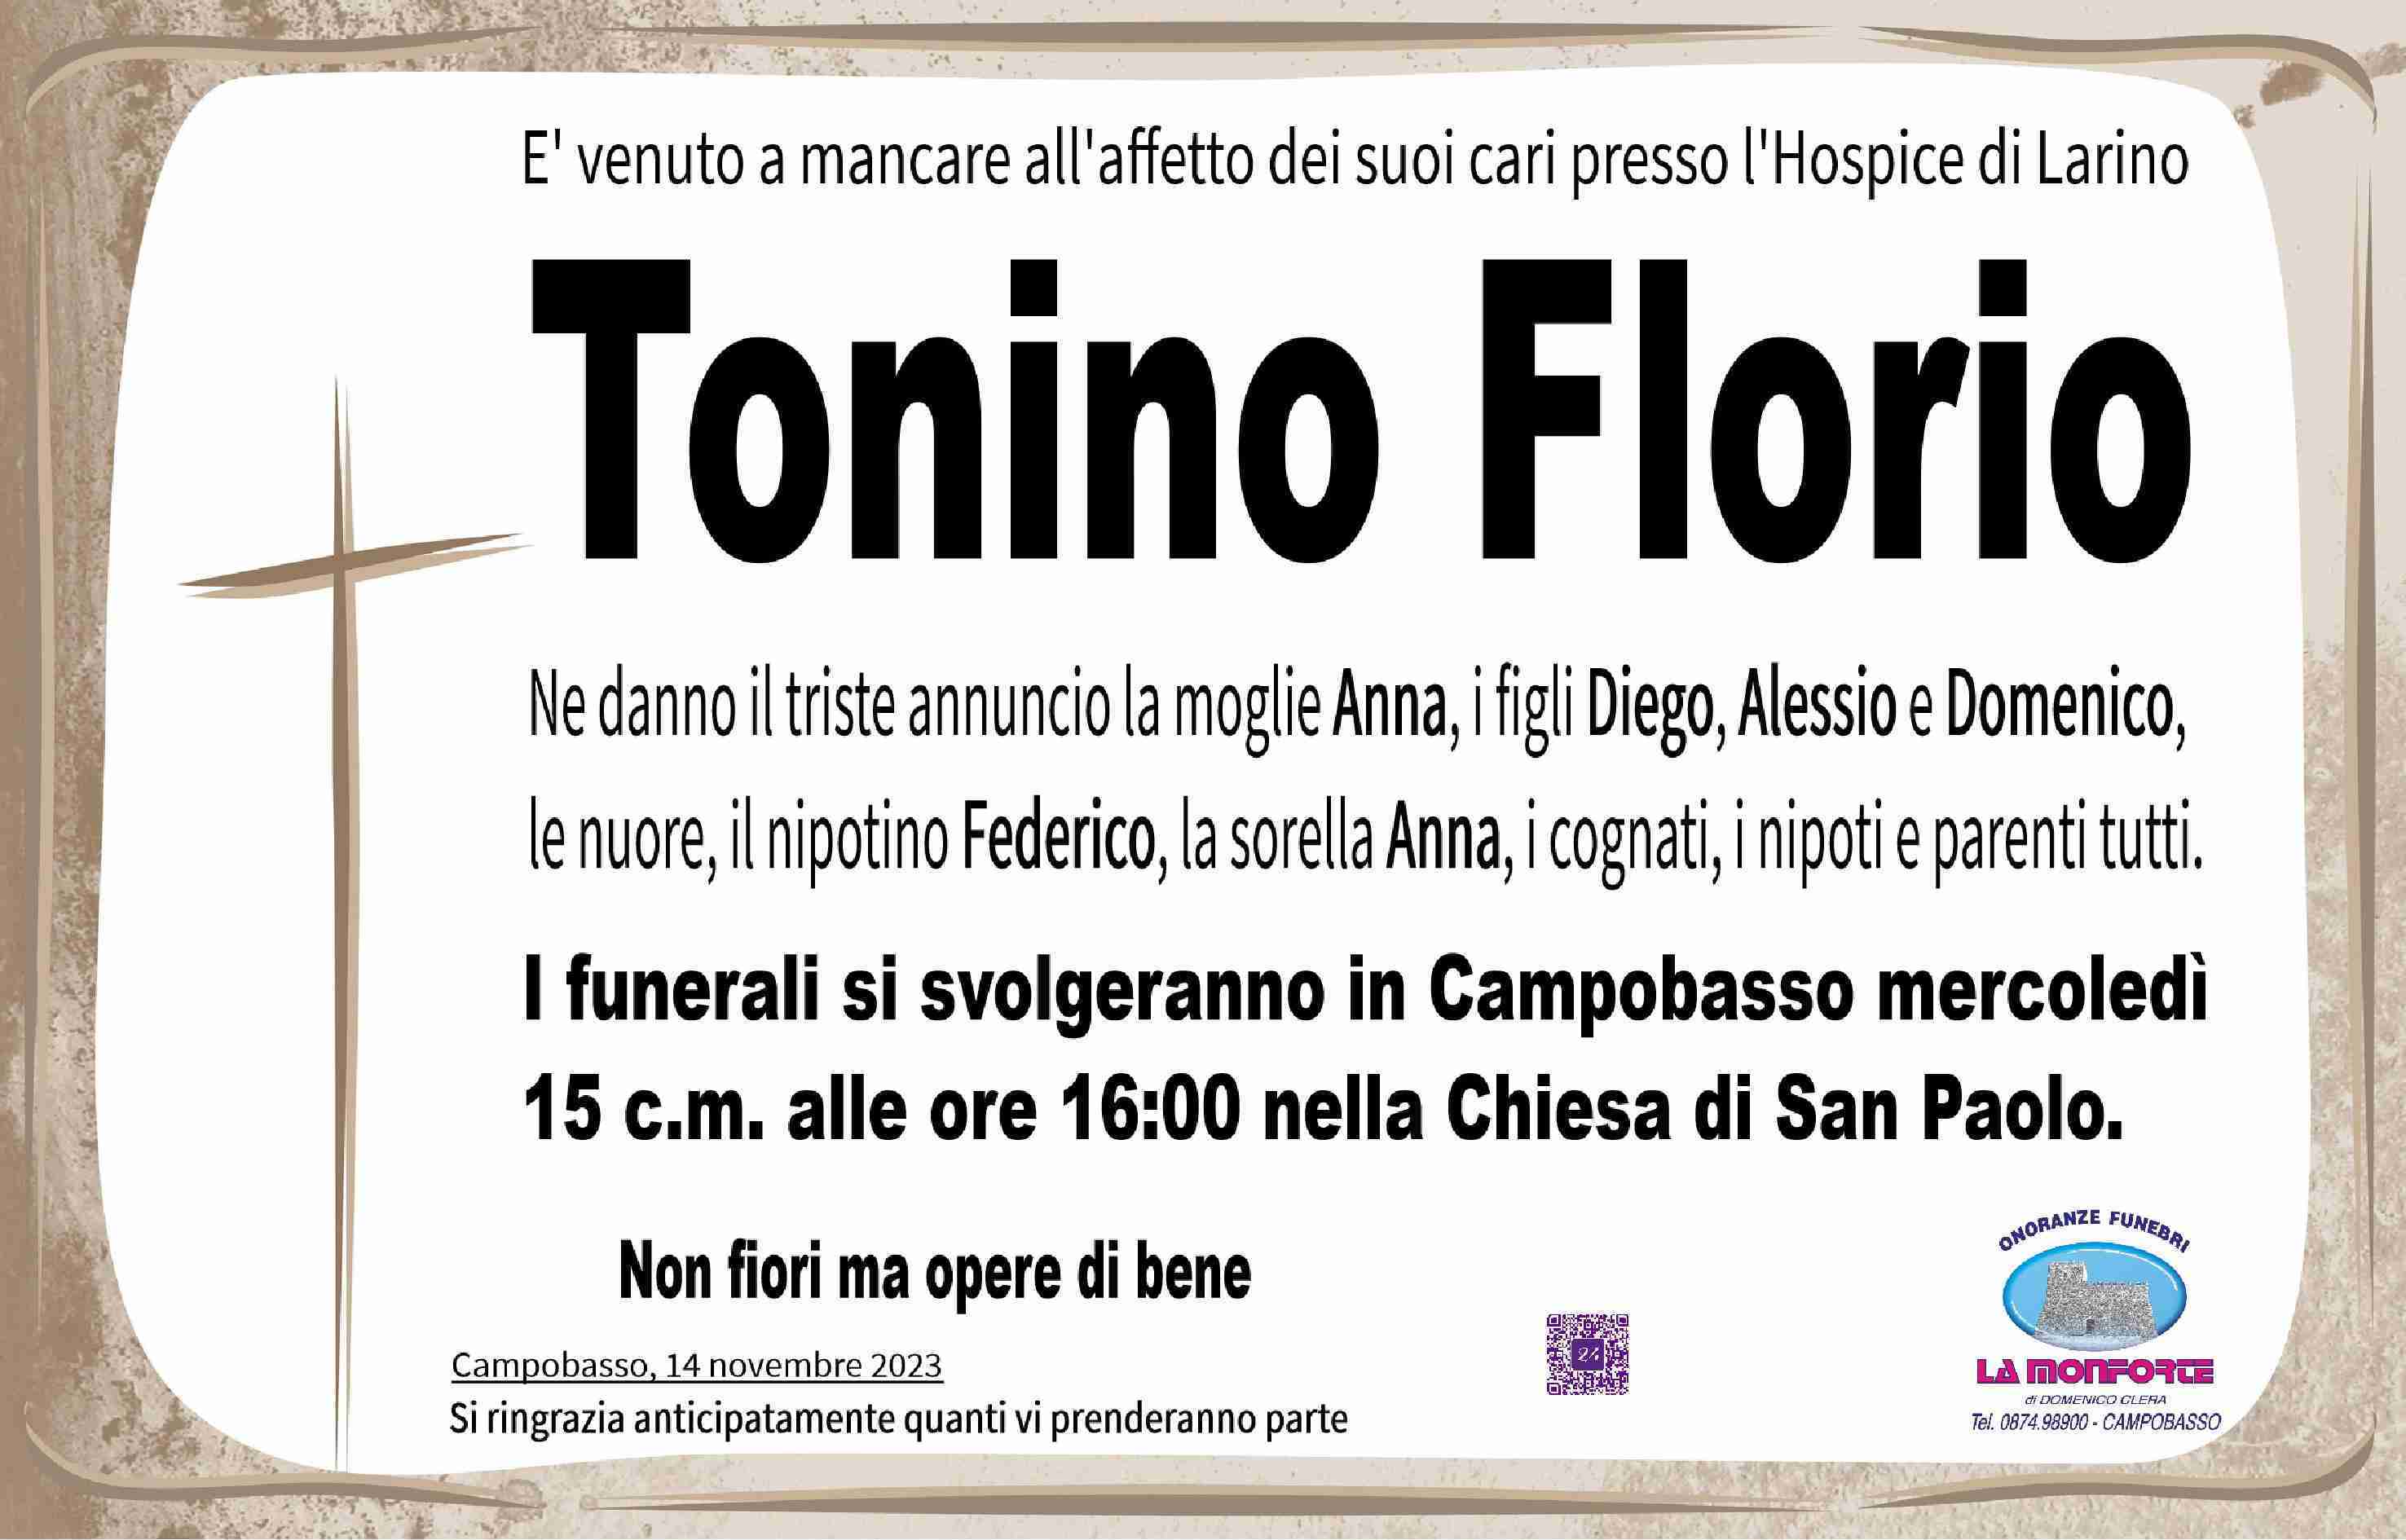 Tonino Florio